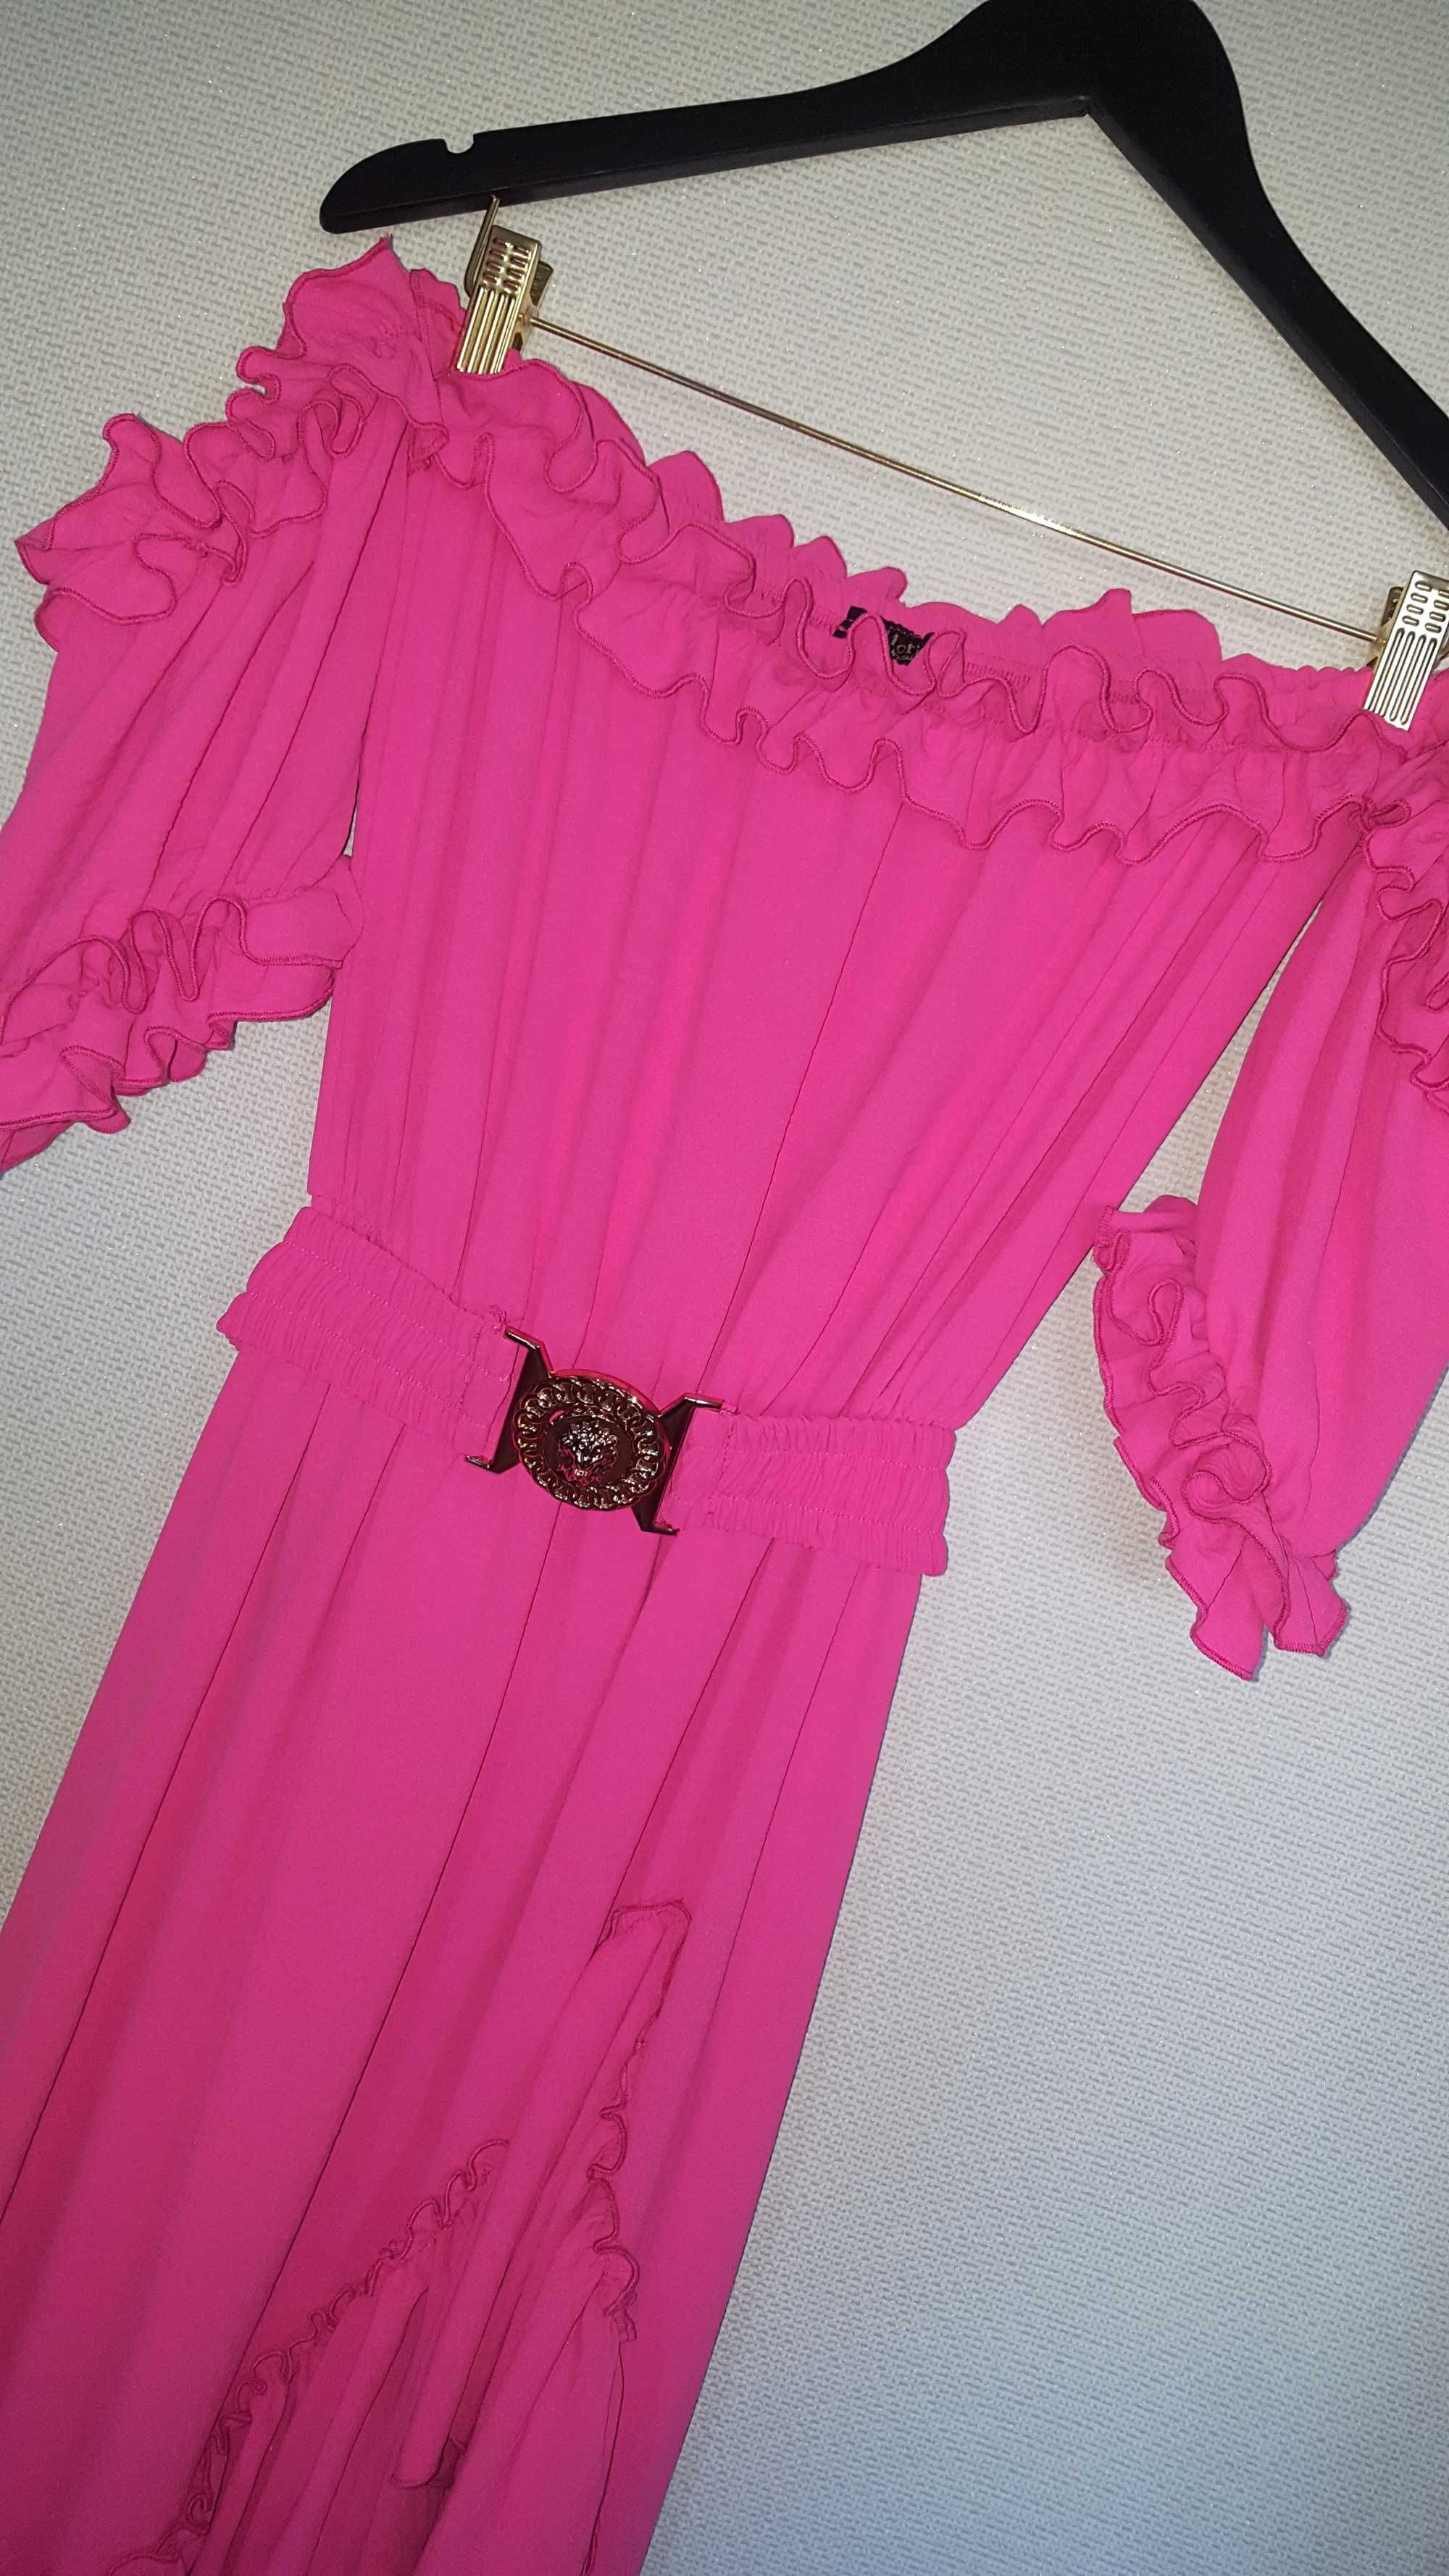 S.MORISS różowa asymetryczna sukienka hiszpanka fuksja